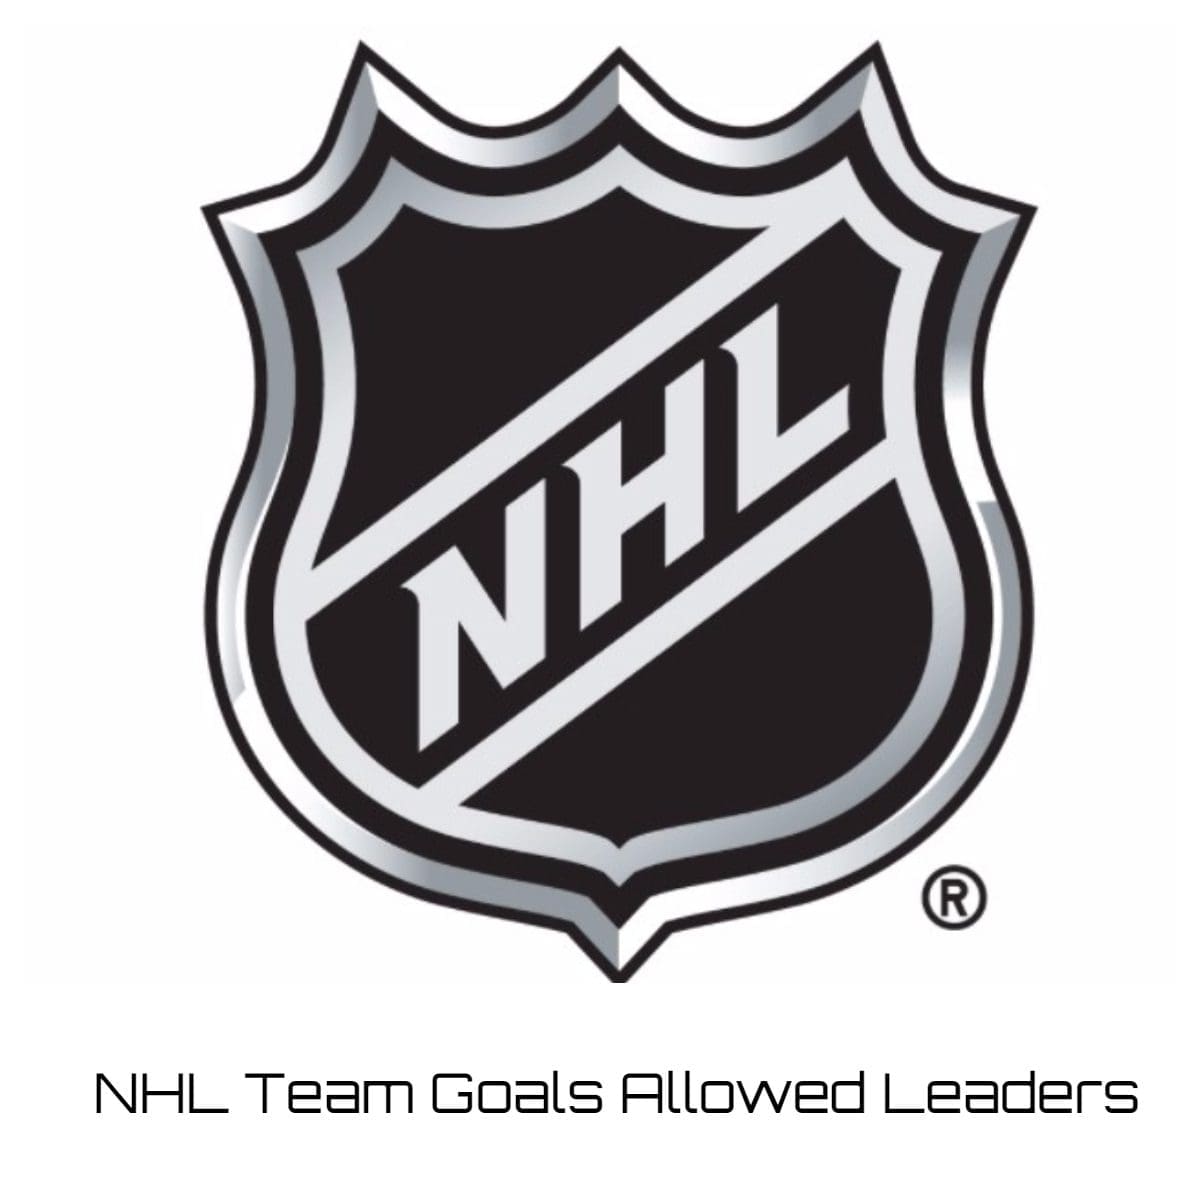 NHL Team Goals Allowed Leaders